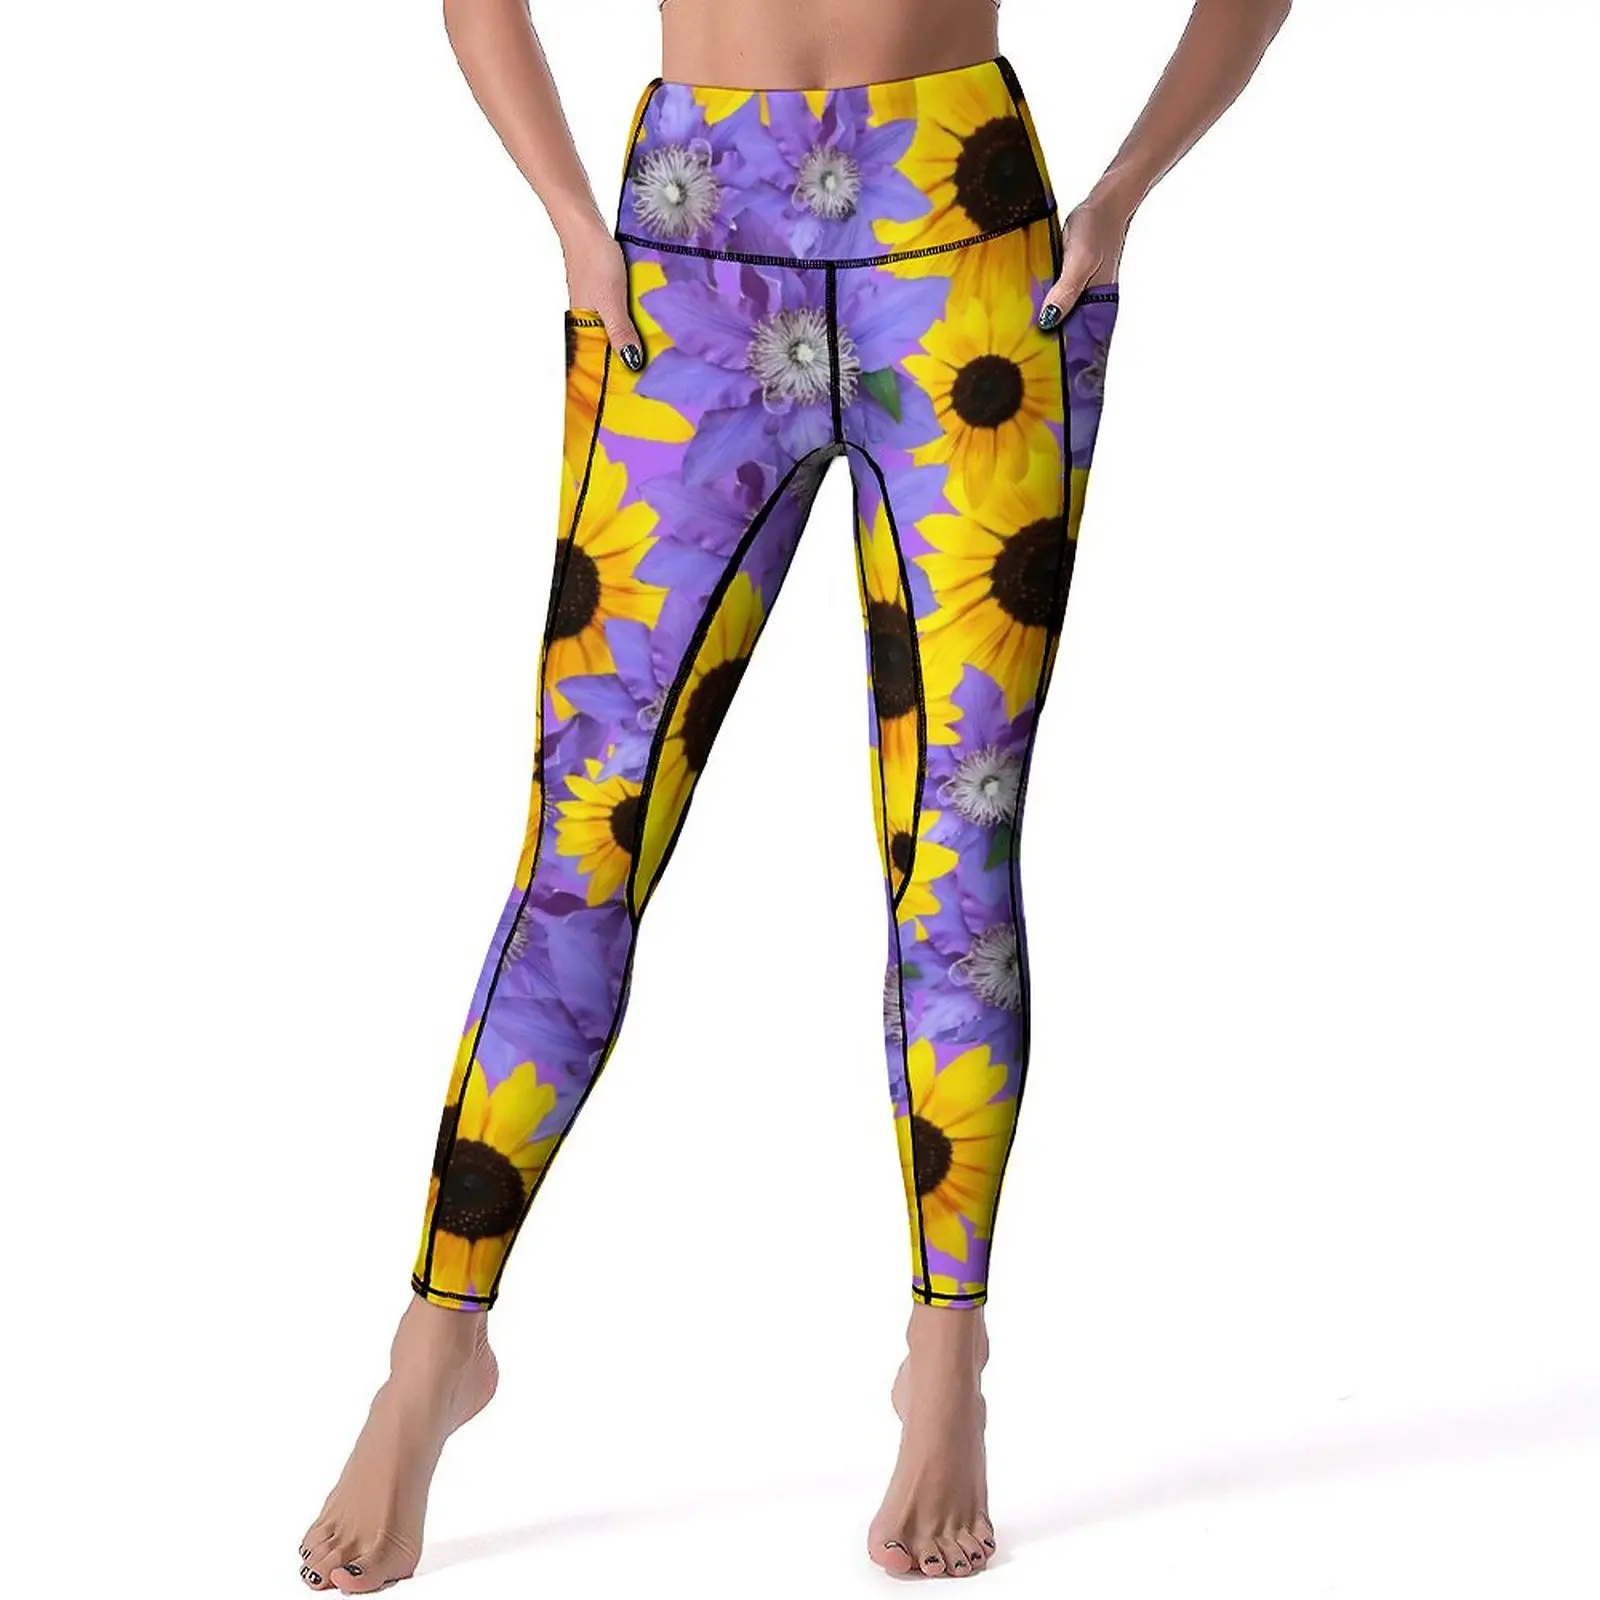 

Sunflower Print Leggings Sexy Purple Floral Workout Yoga Pants Push Up Stretch Sport Legging Pockets Sweet Graphic Leggins